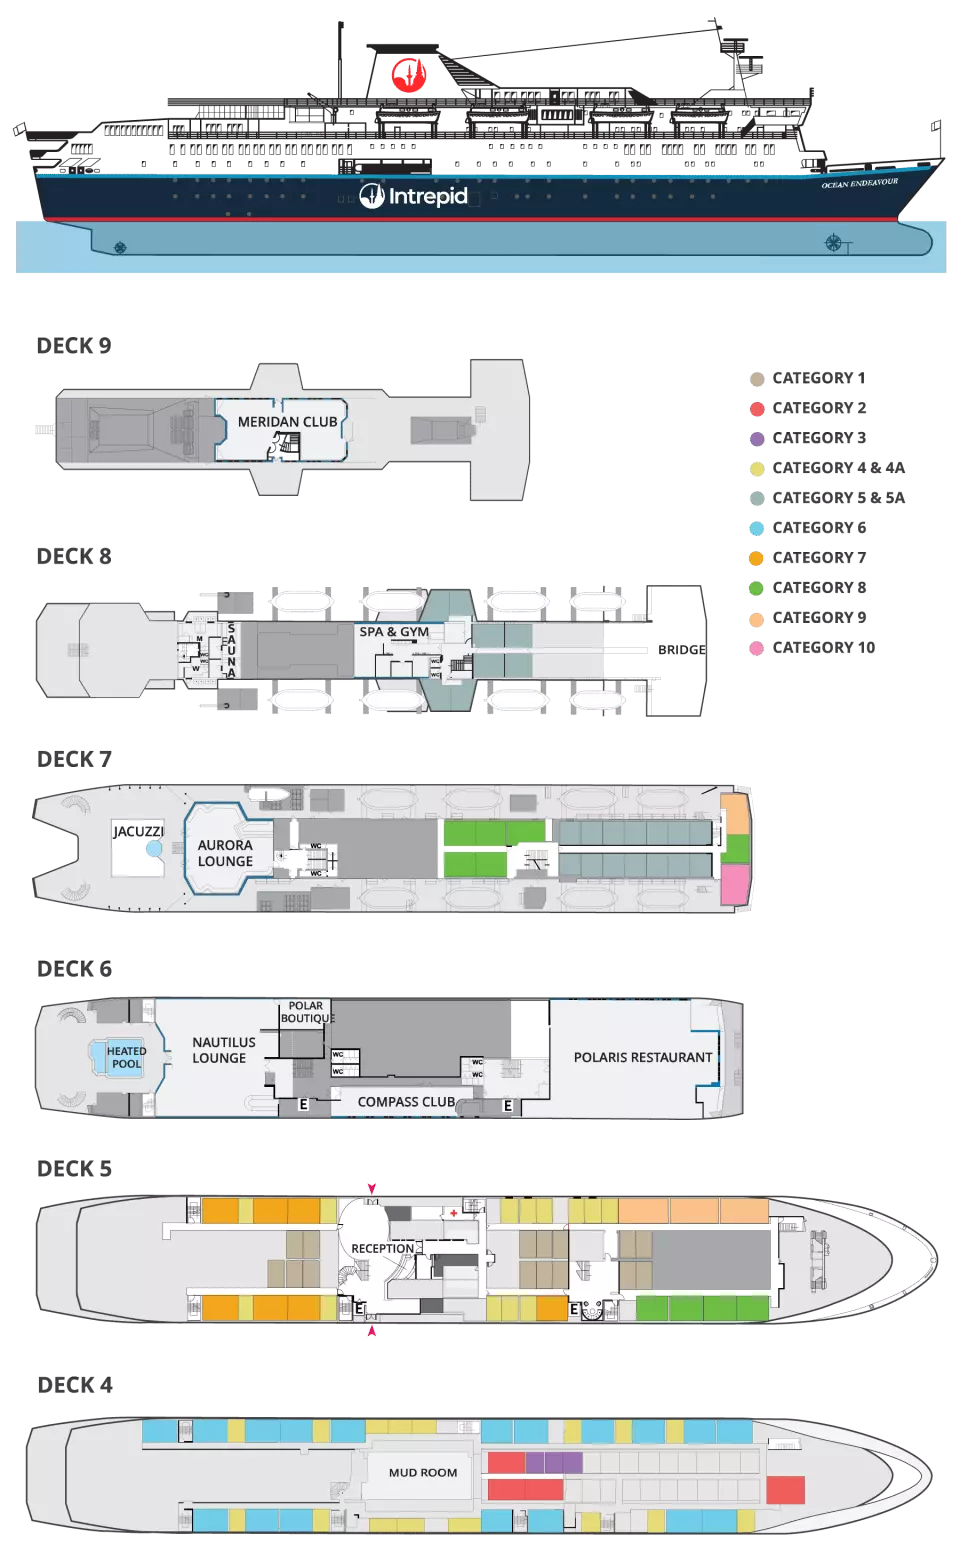 ocean endeavour small ship deck plan showing 6 passenger decks & 10 cabin categories on a polar expedition ship